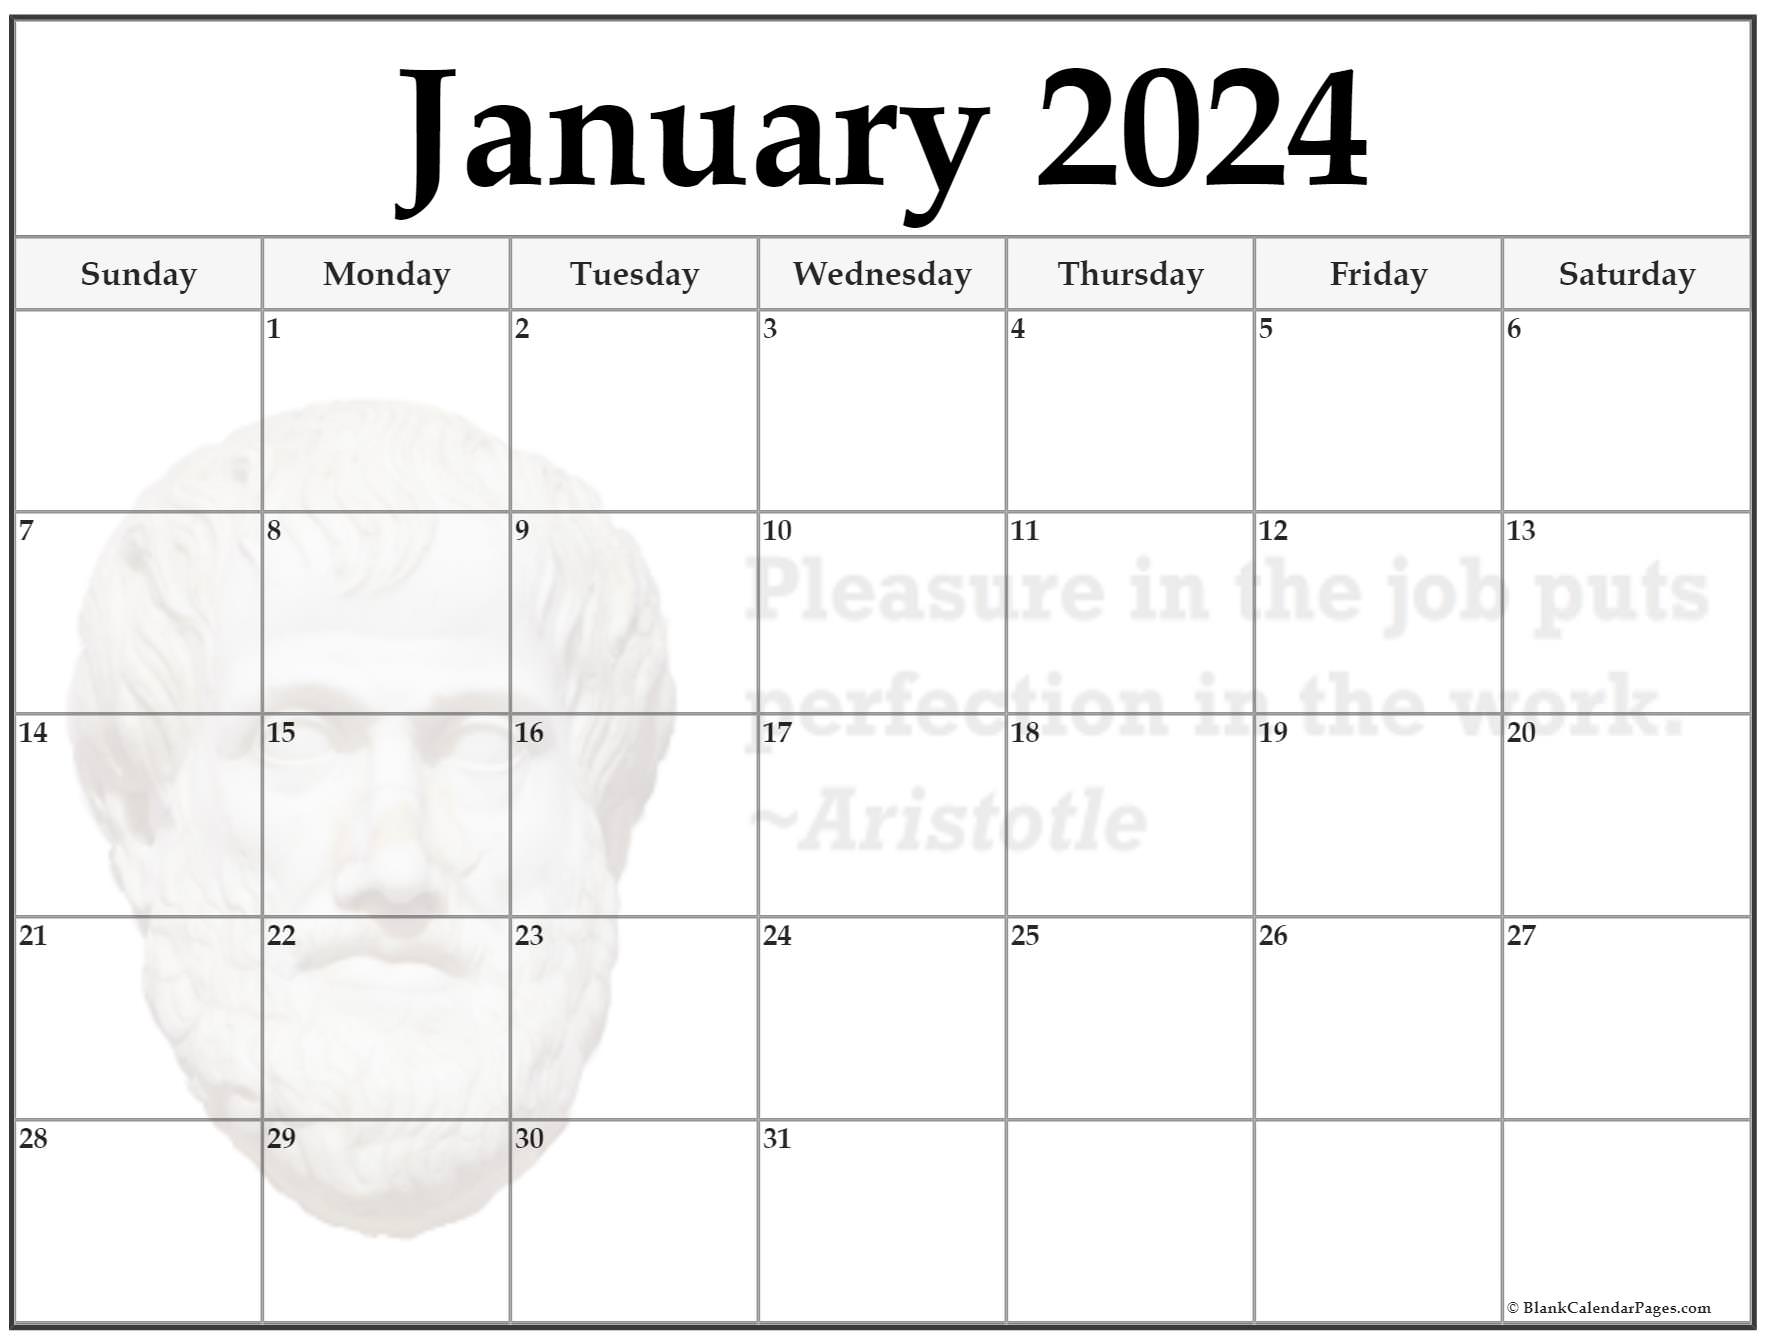 Слушать январь 2023. January 2023 календарь. Календарь планер на январь 2023. January 2023 Calendar Printable. Календарь январь 2023 распечатать.